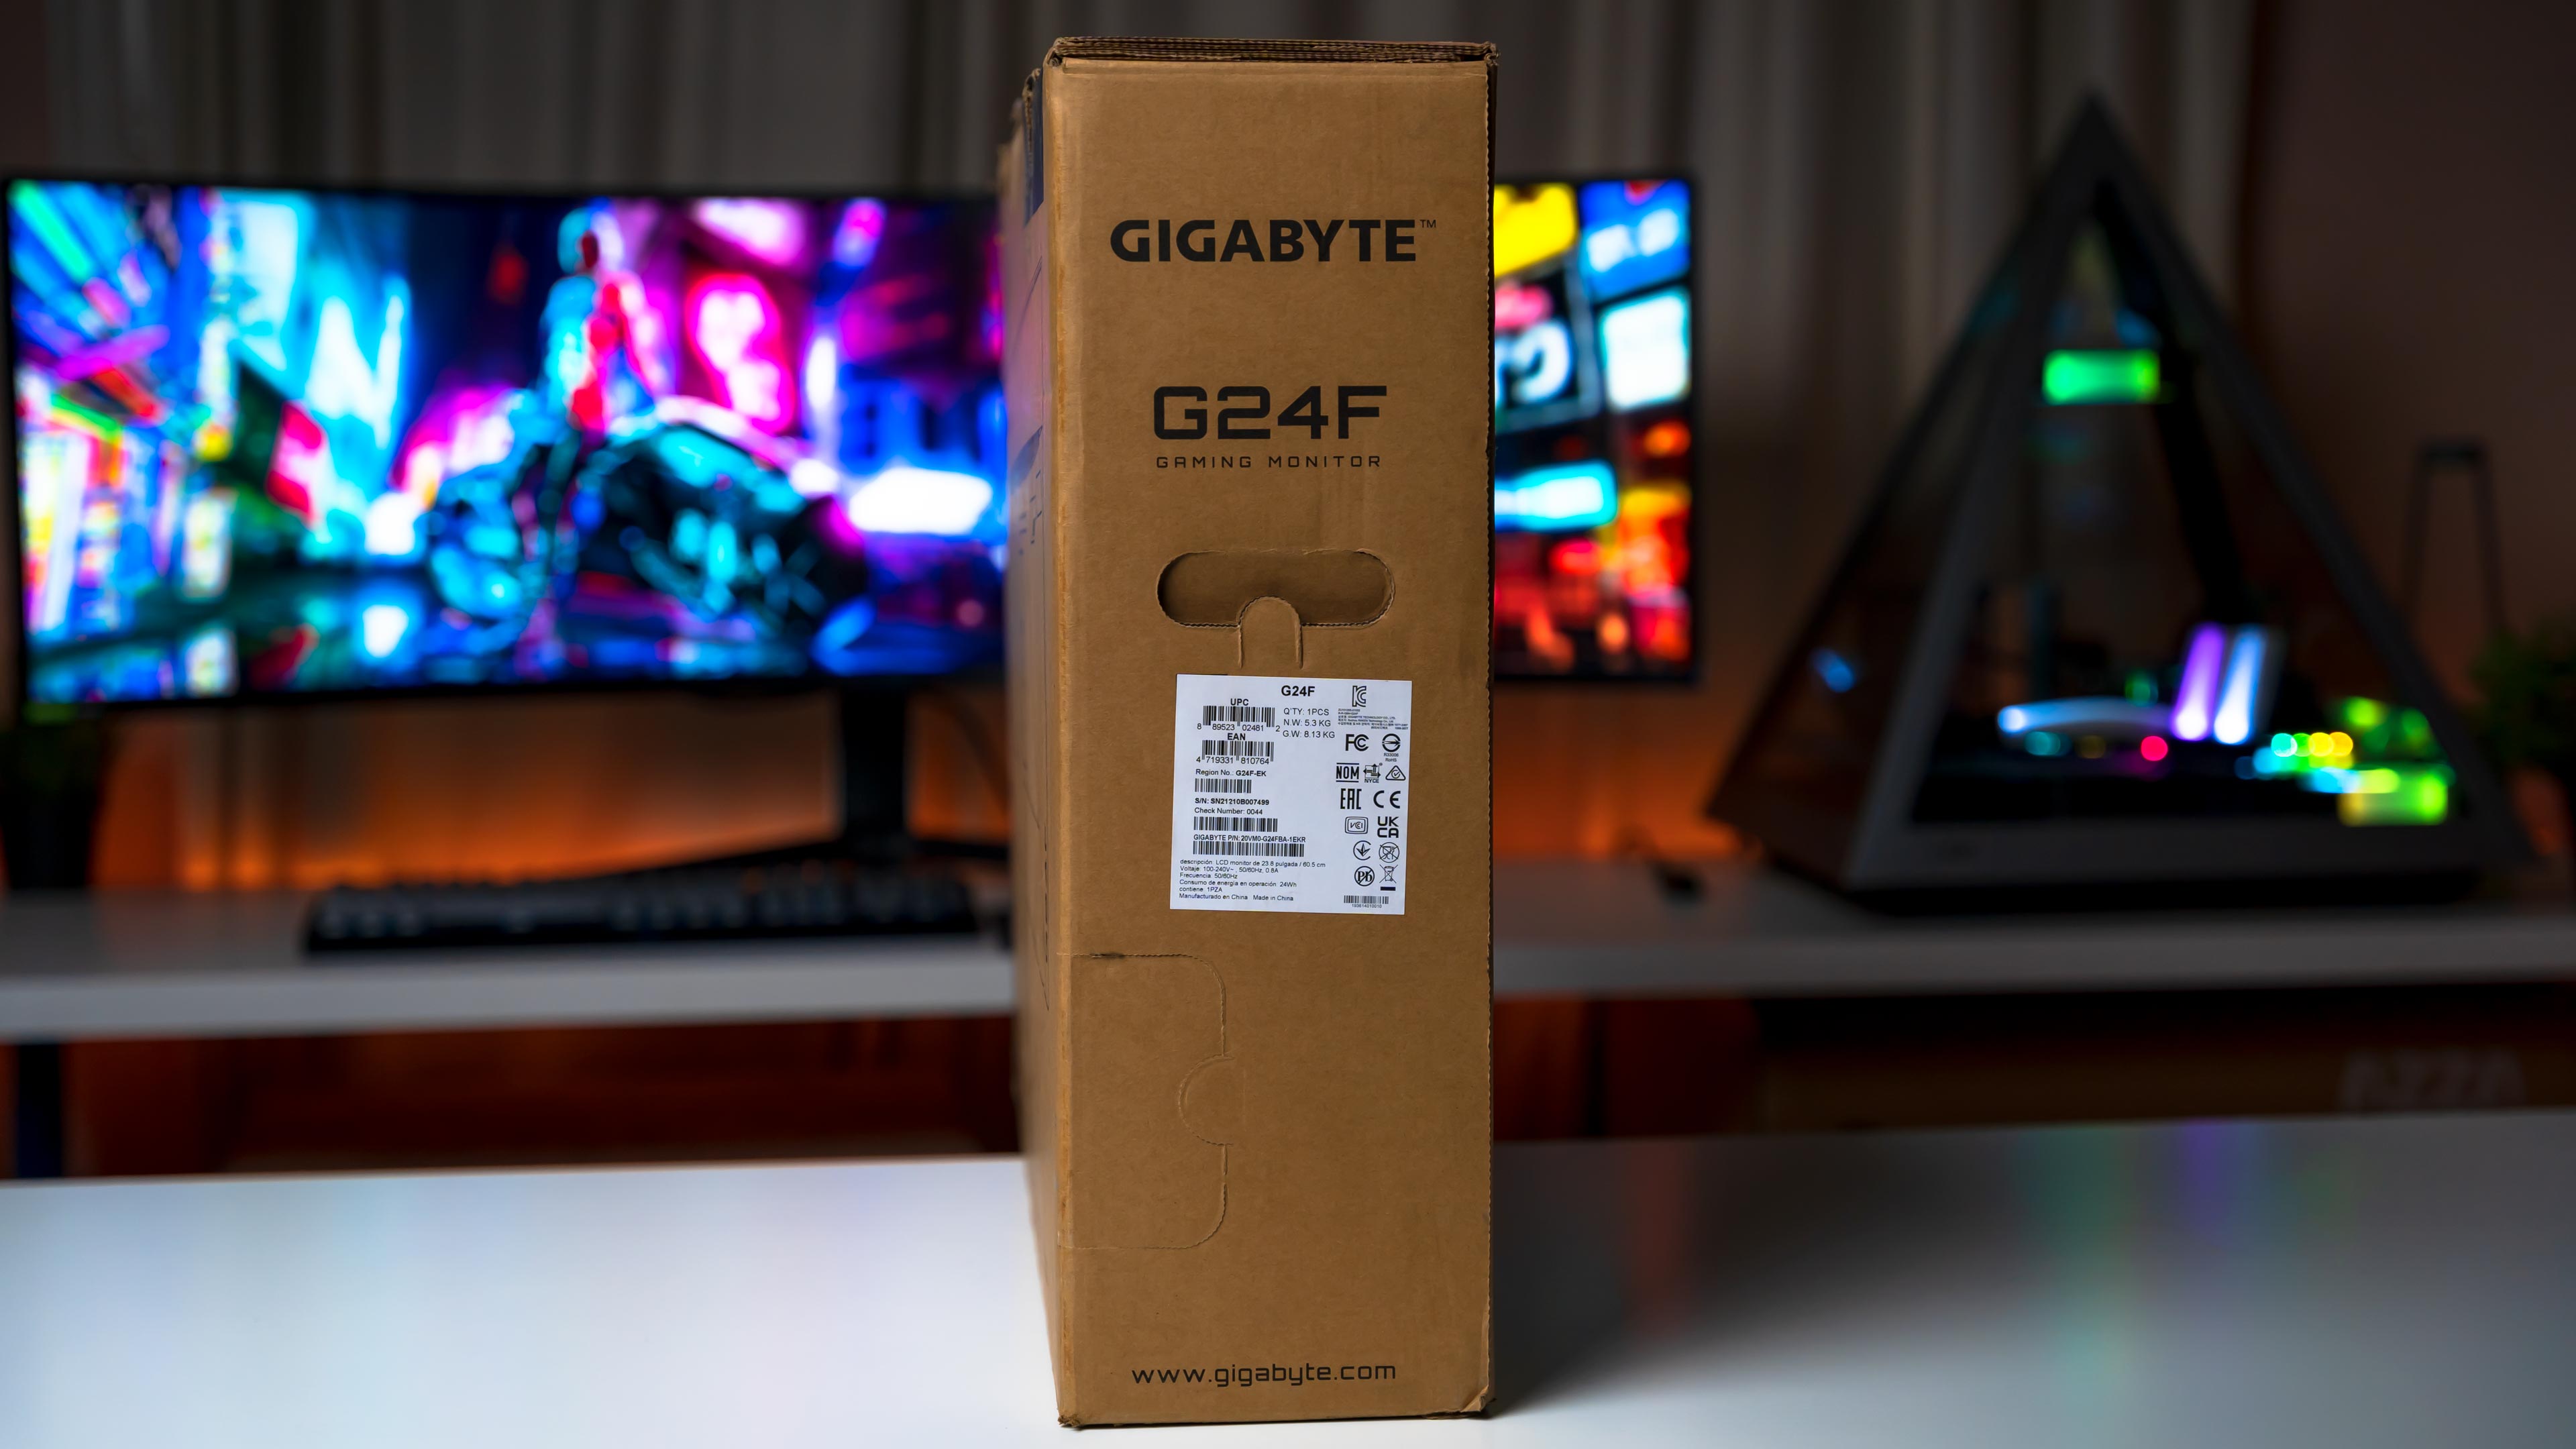 Gigabyte G24F Gaming Monitor Box (6)